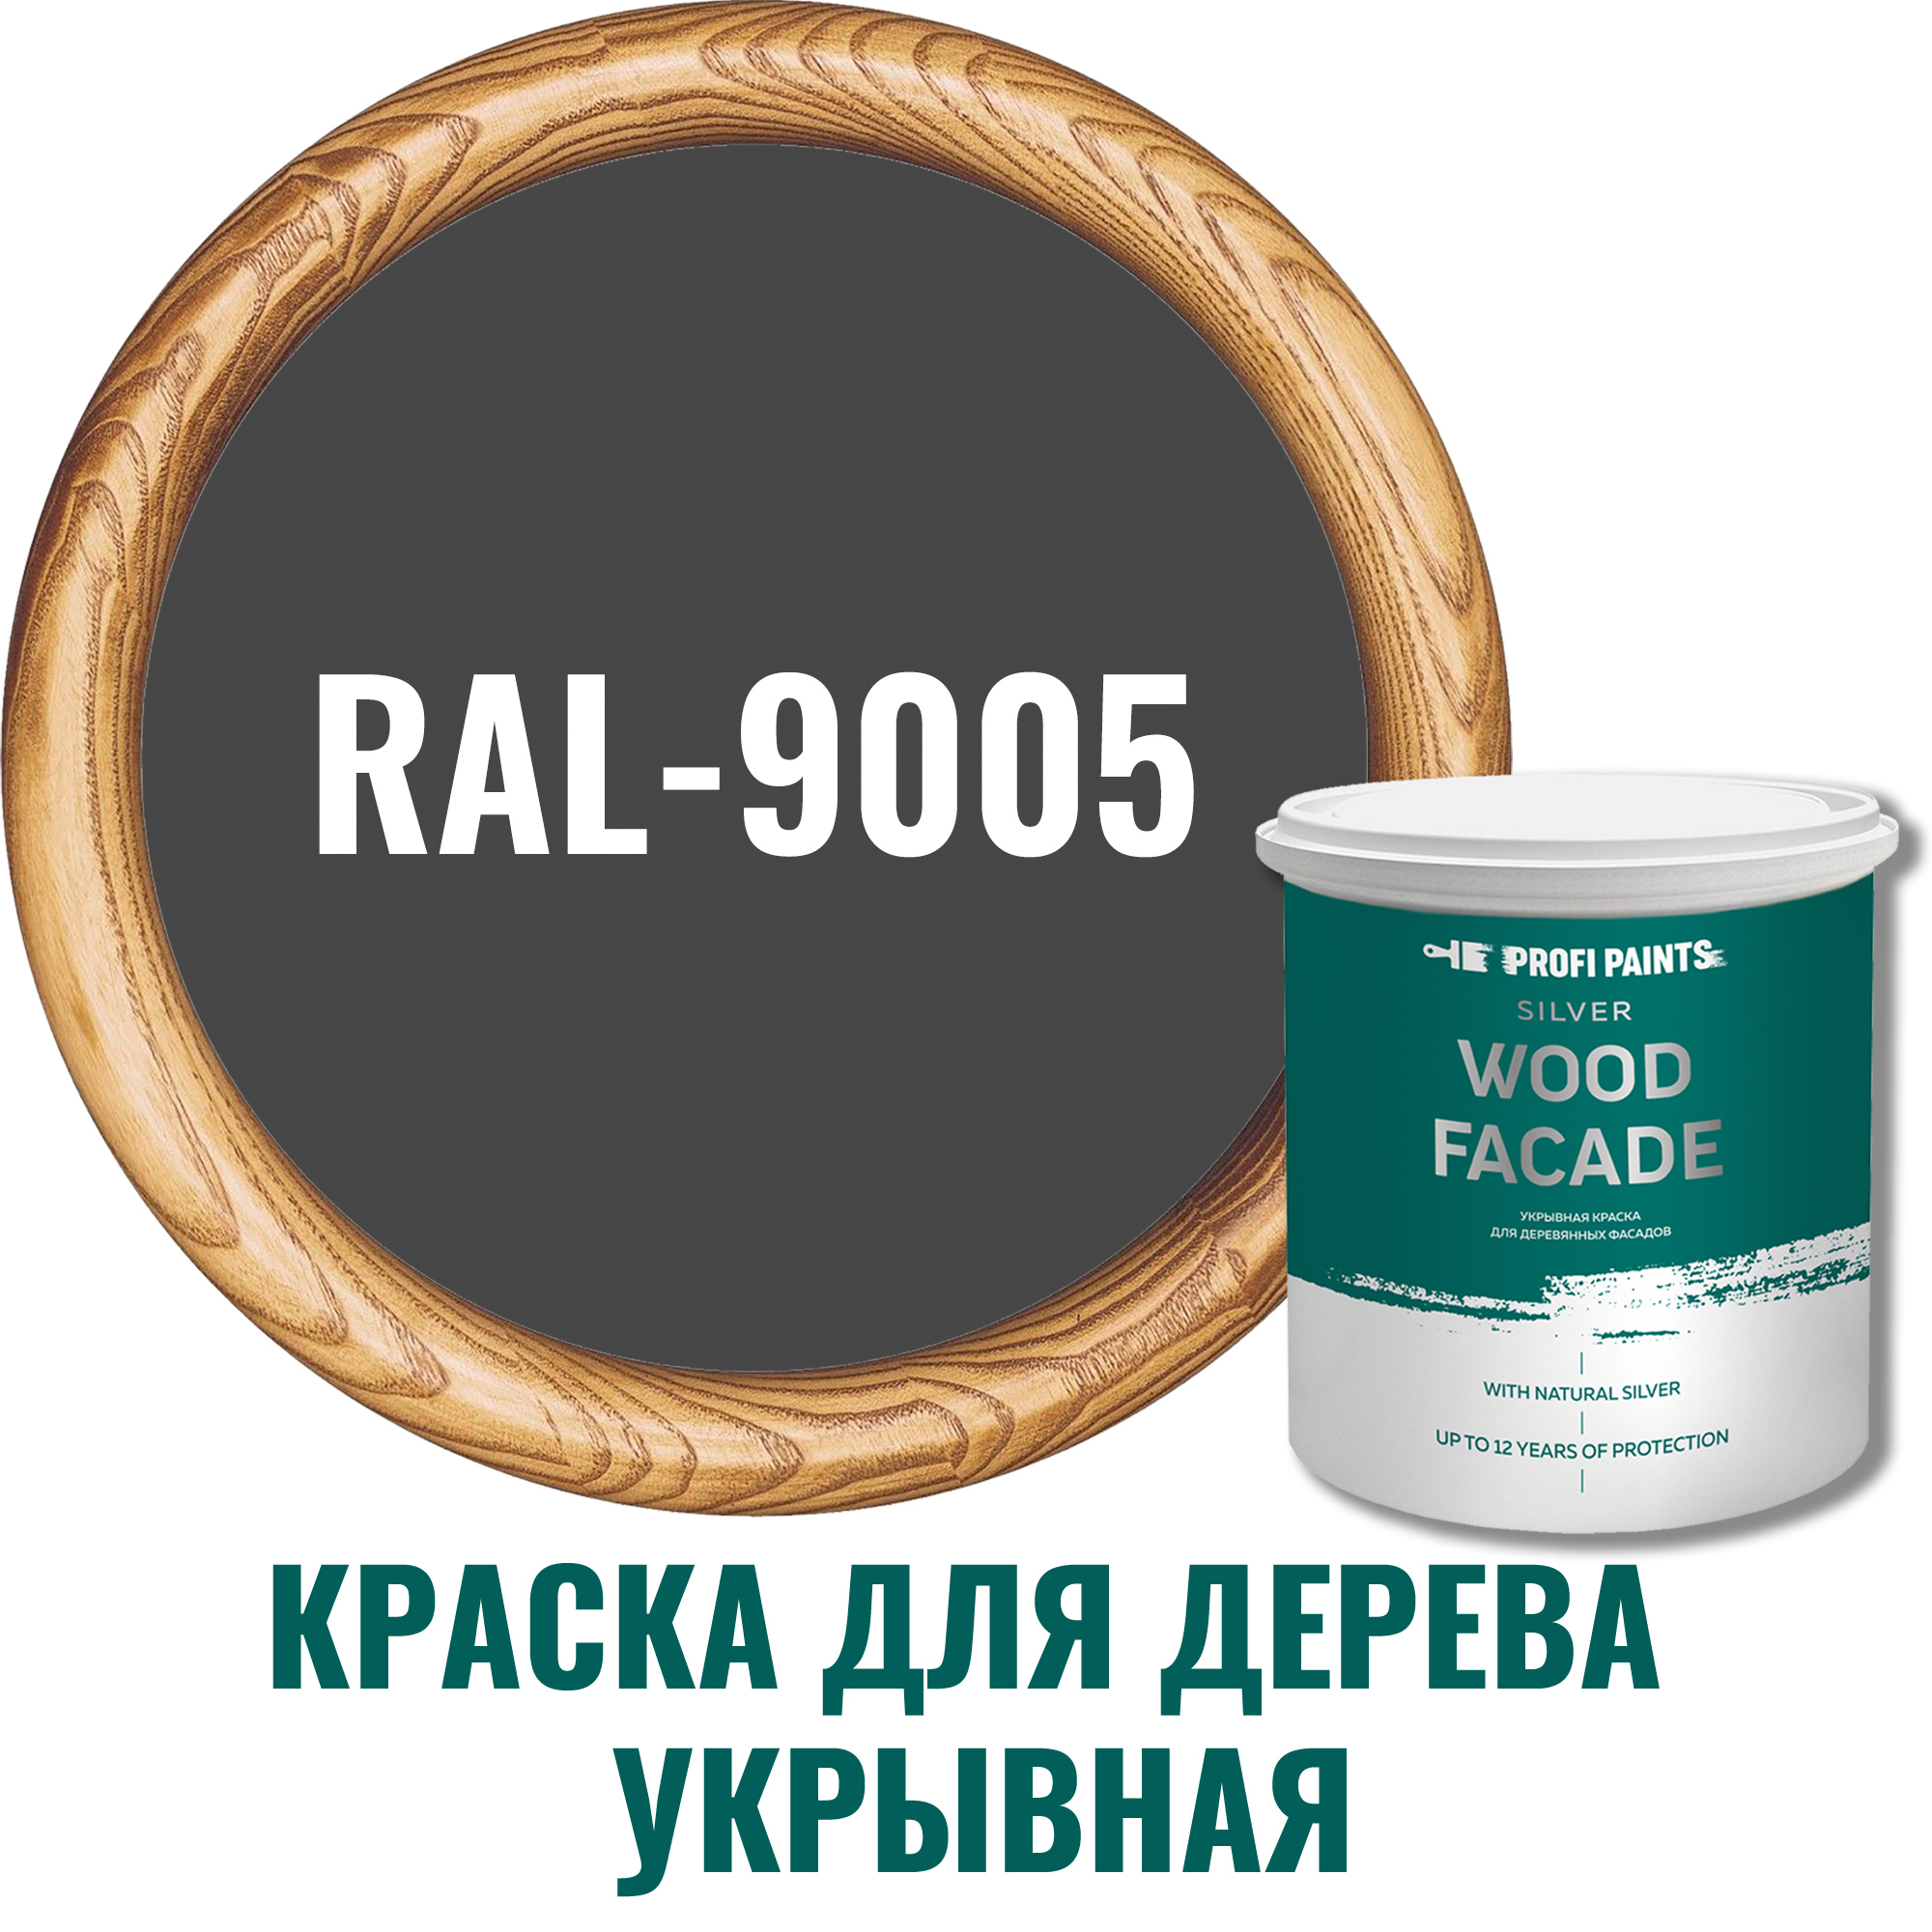 91106653 Краска для дерева 11294_D SILVER WOOD FASADE цвет RAL-9005 черный 2.7 л STLM-0487644 PROFIPAINTS